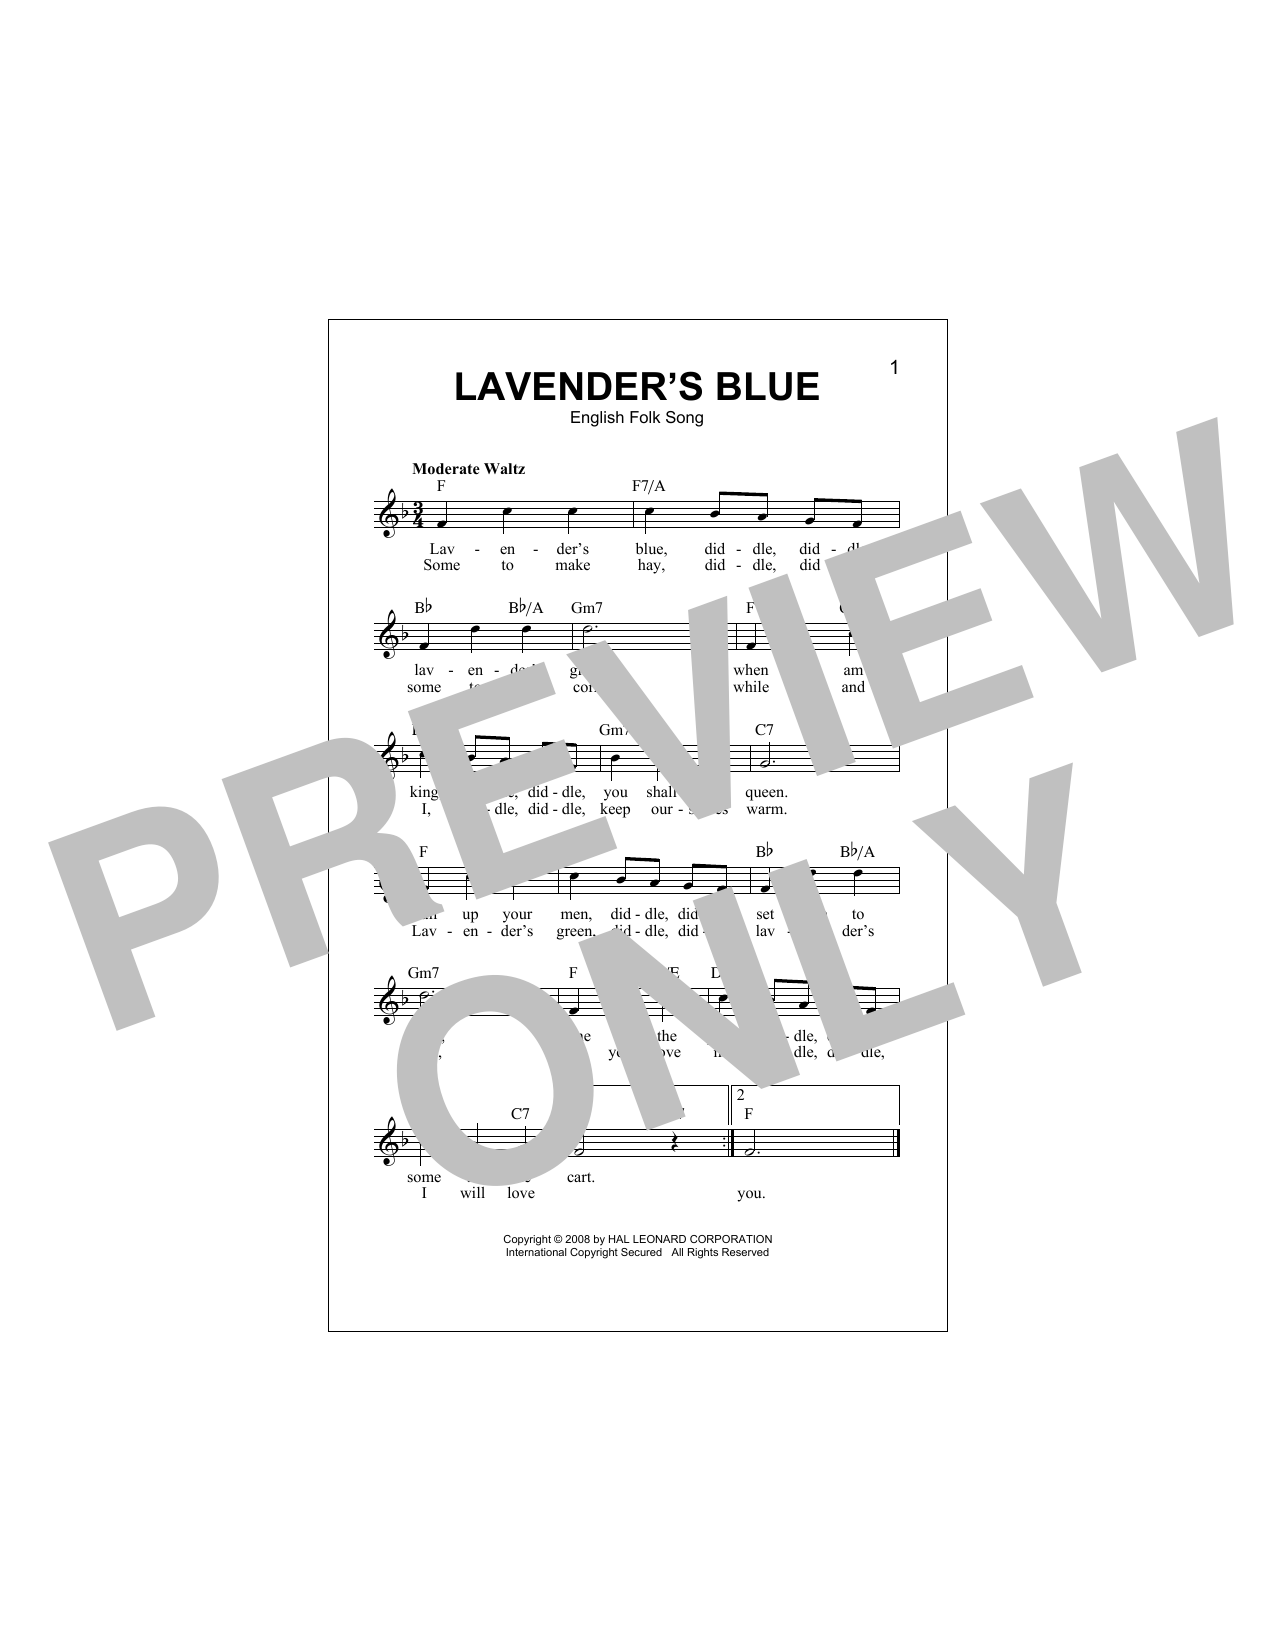 English Folk Song Lavender's Blue sheet music notes and chords arranged for Ukulele